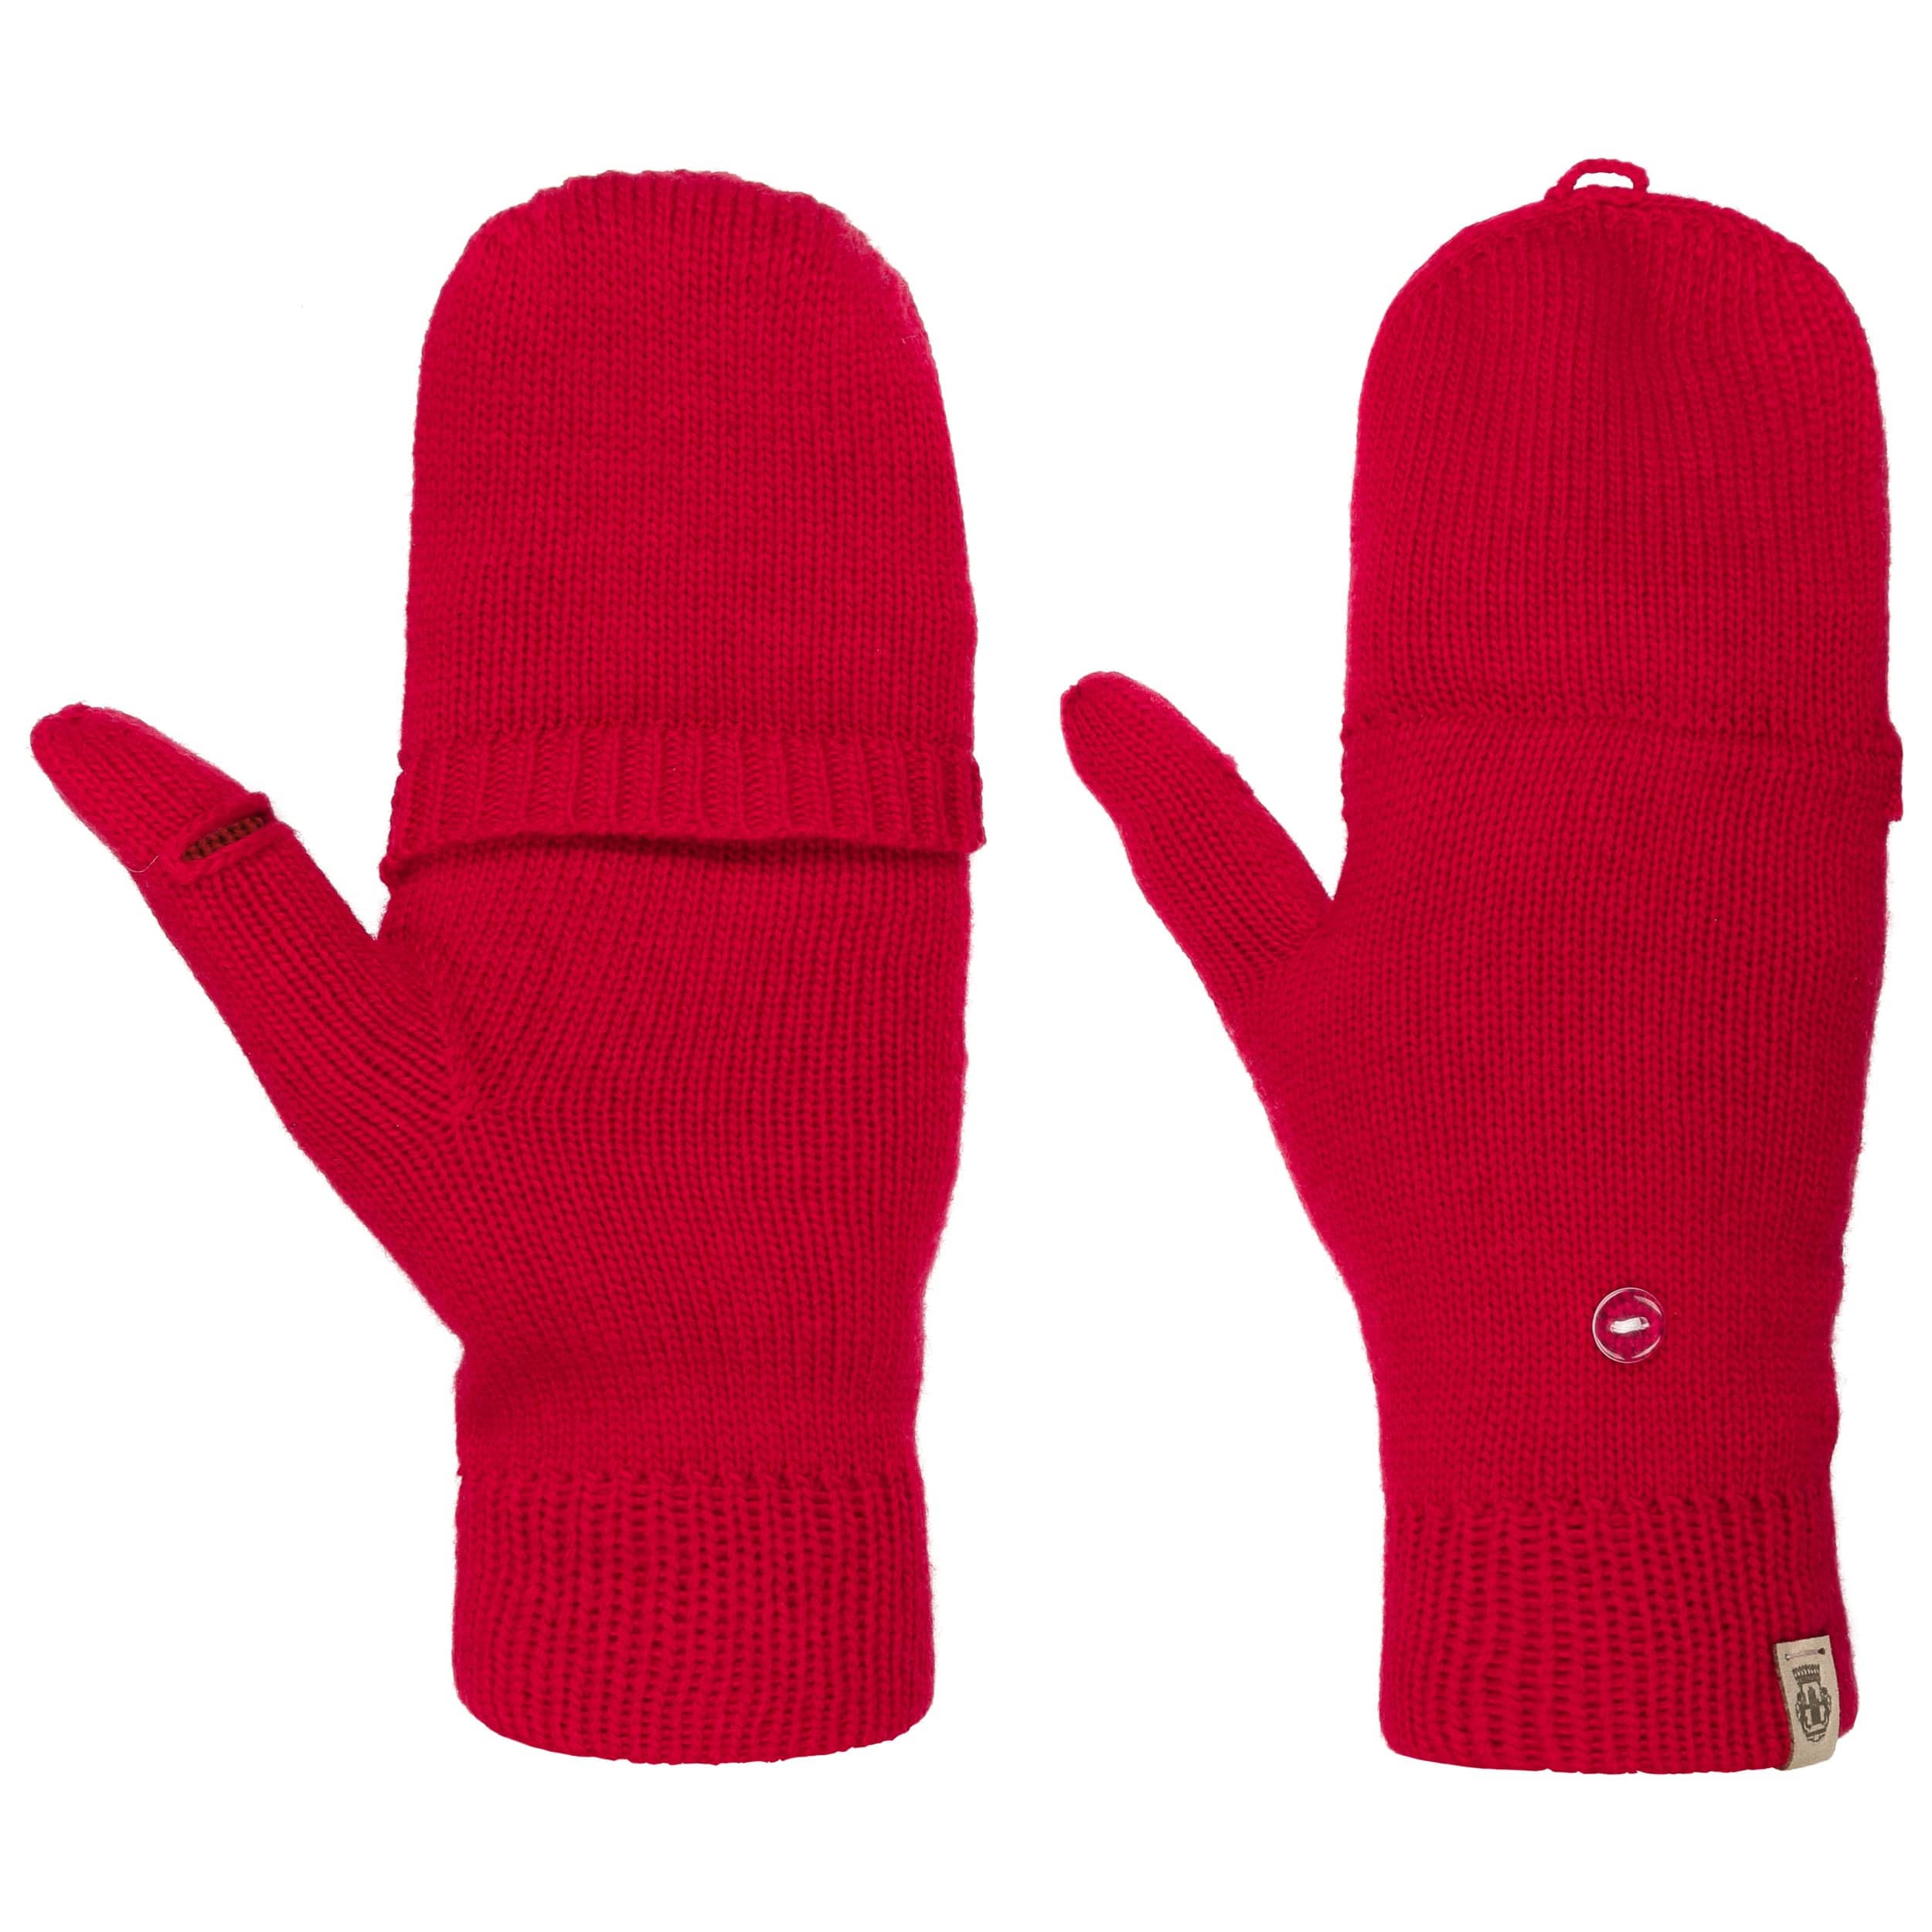 Accessoires Handschoenen & wanten Armwarmers Lange vingerloze kasjmier gebreide handschoenen voor vrouwen Kerstcadeau ideeën Zwart kasjmier gebreide armwarmers vingerloze handschoenen voor vrouwen 